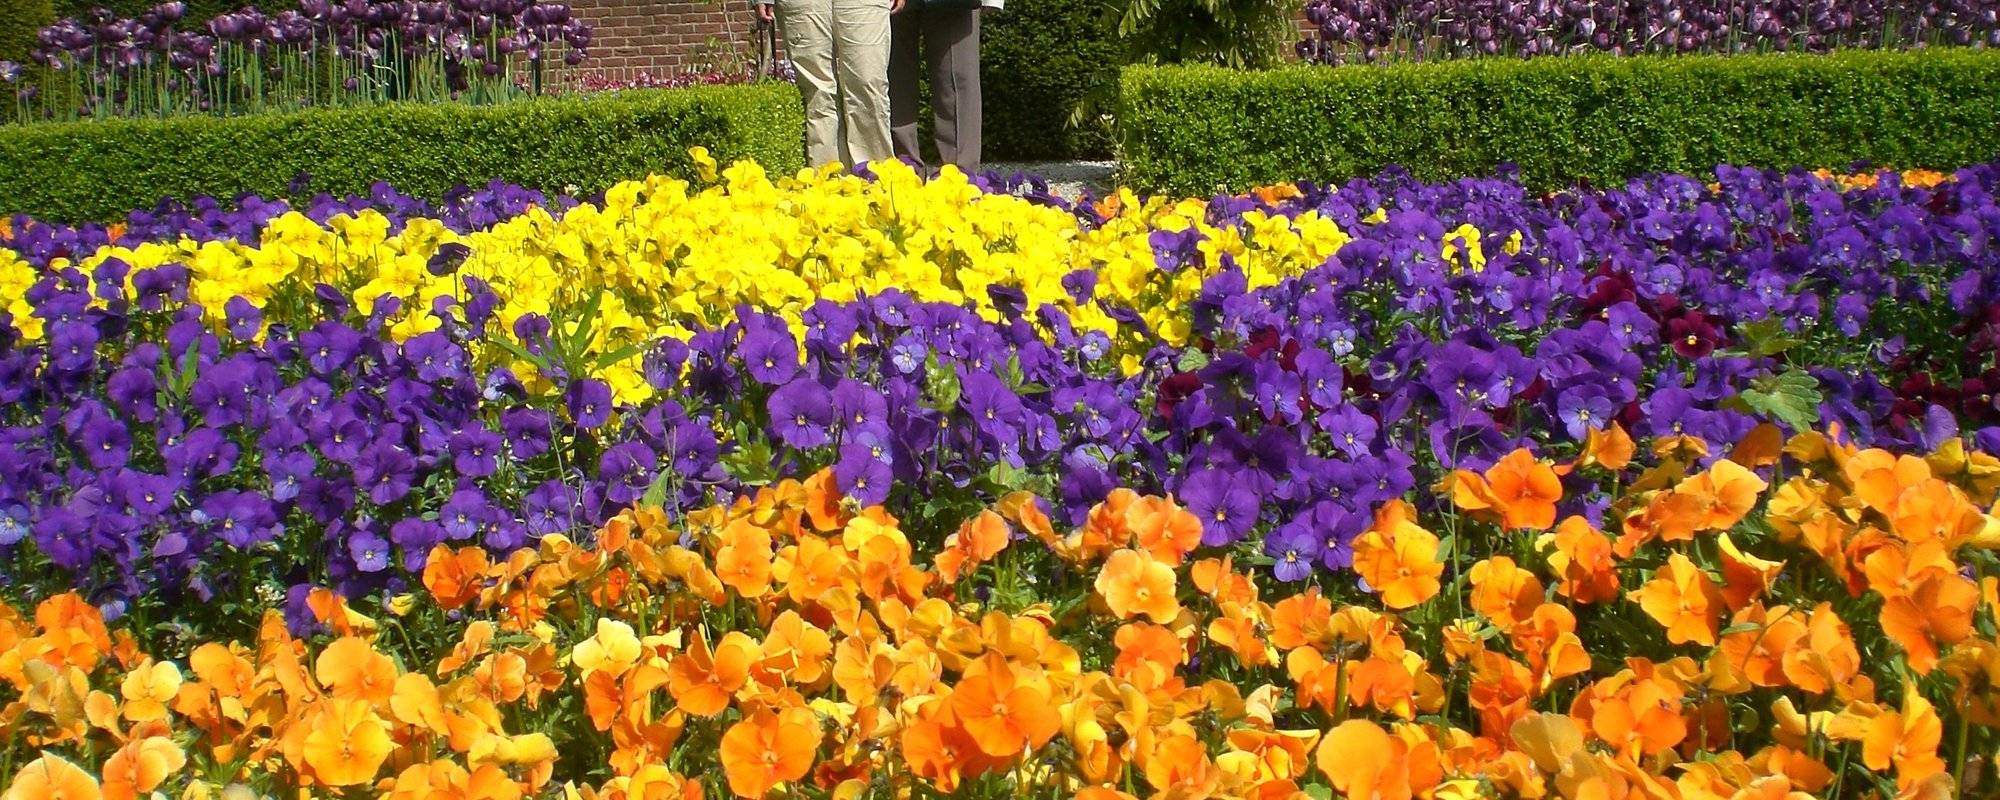 Welcome spring. A tour of the Keukenhof park - Holland